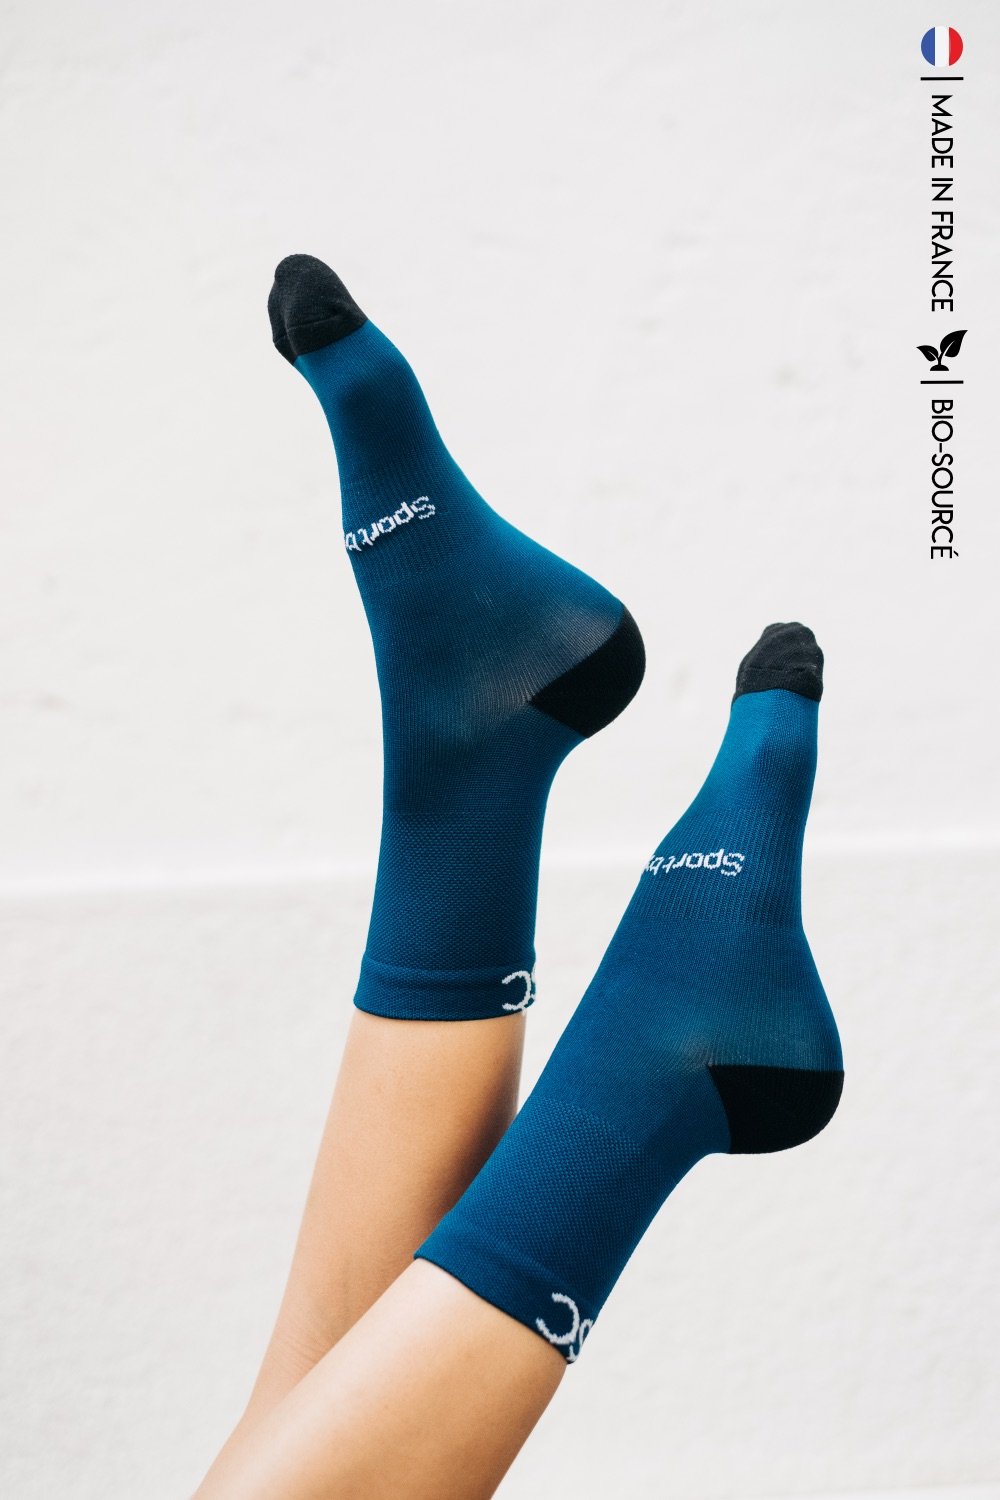 SOCKS-1 - Chaussettes multisports [blue]